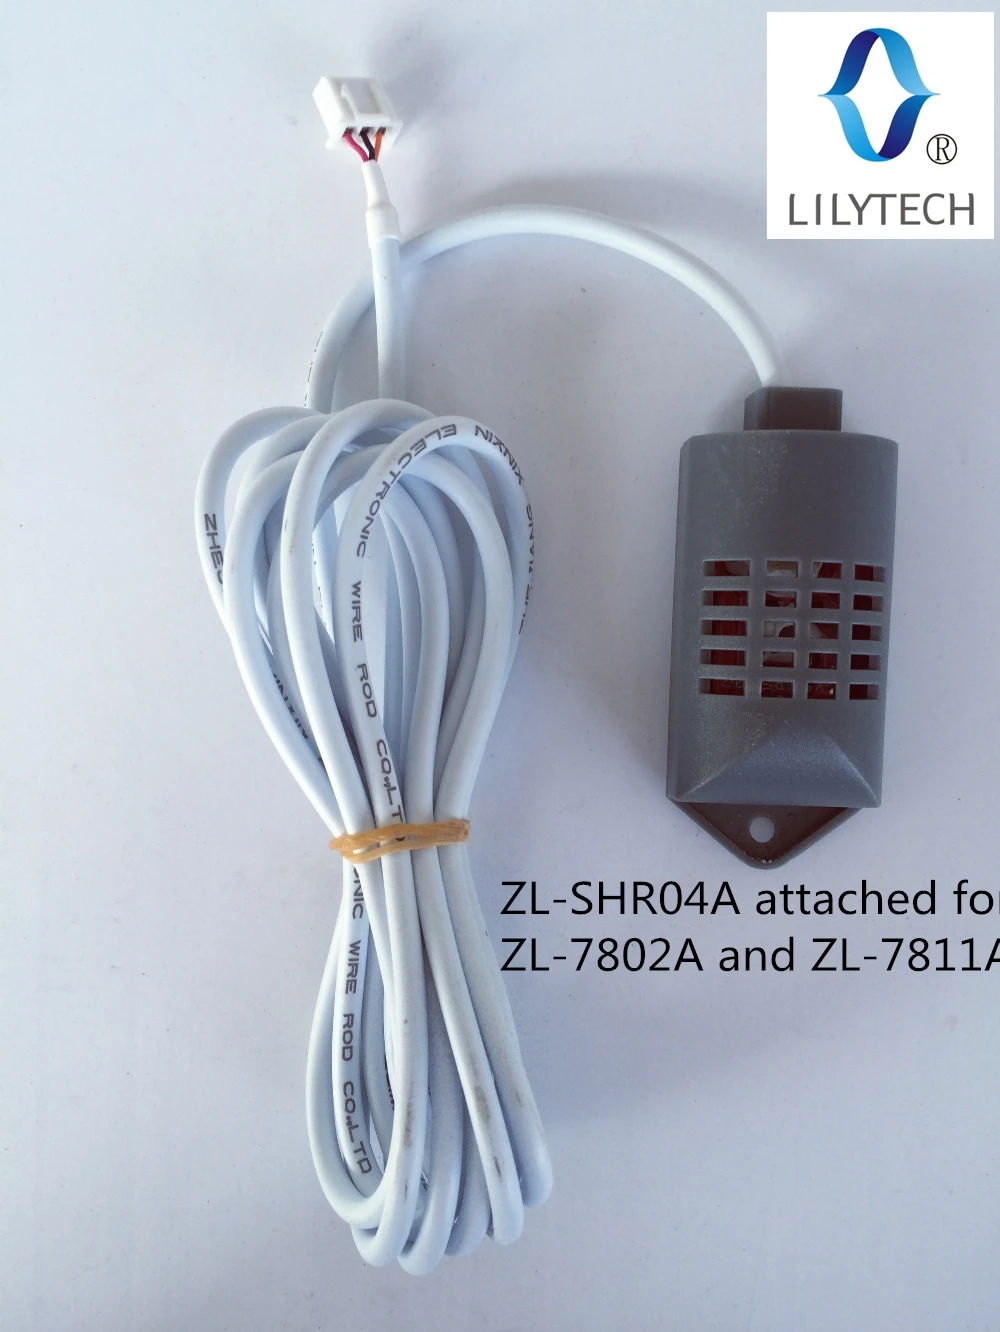 ZL-7816A, 12 V, Температура и регулятор влажности, термостат и гигростат, lilytech